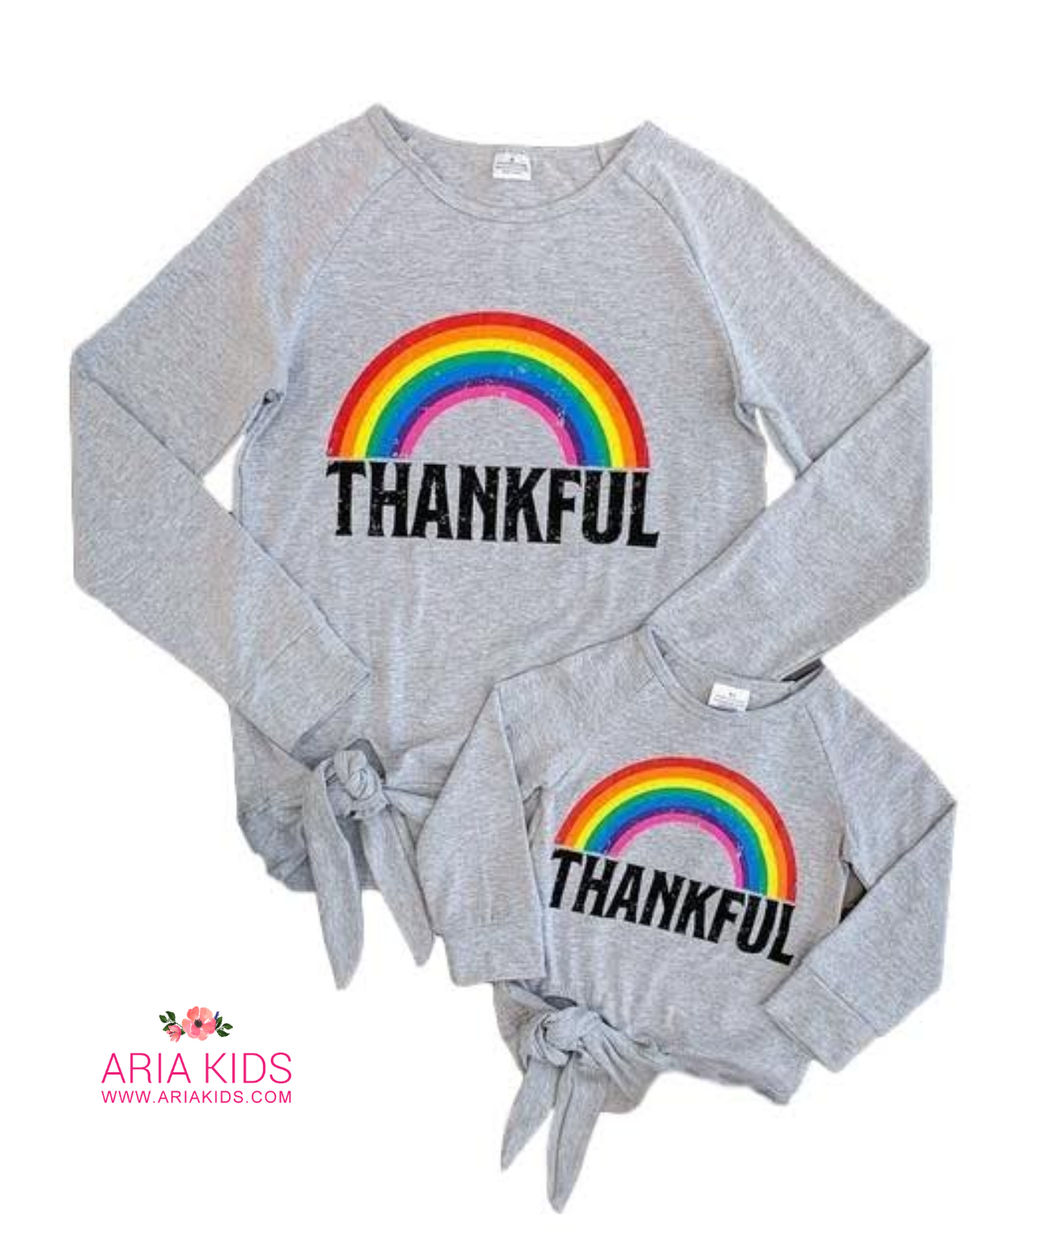 WHOLESALE CLEARANCE BUNDLE - Mommy & Me Rainbow Thankful Shirts - ARIA KIDS